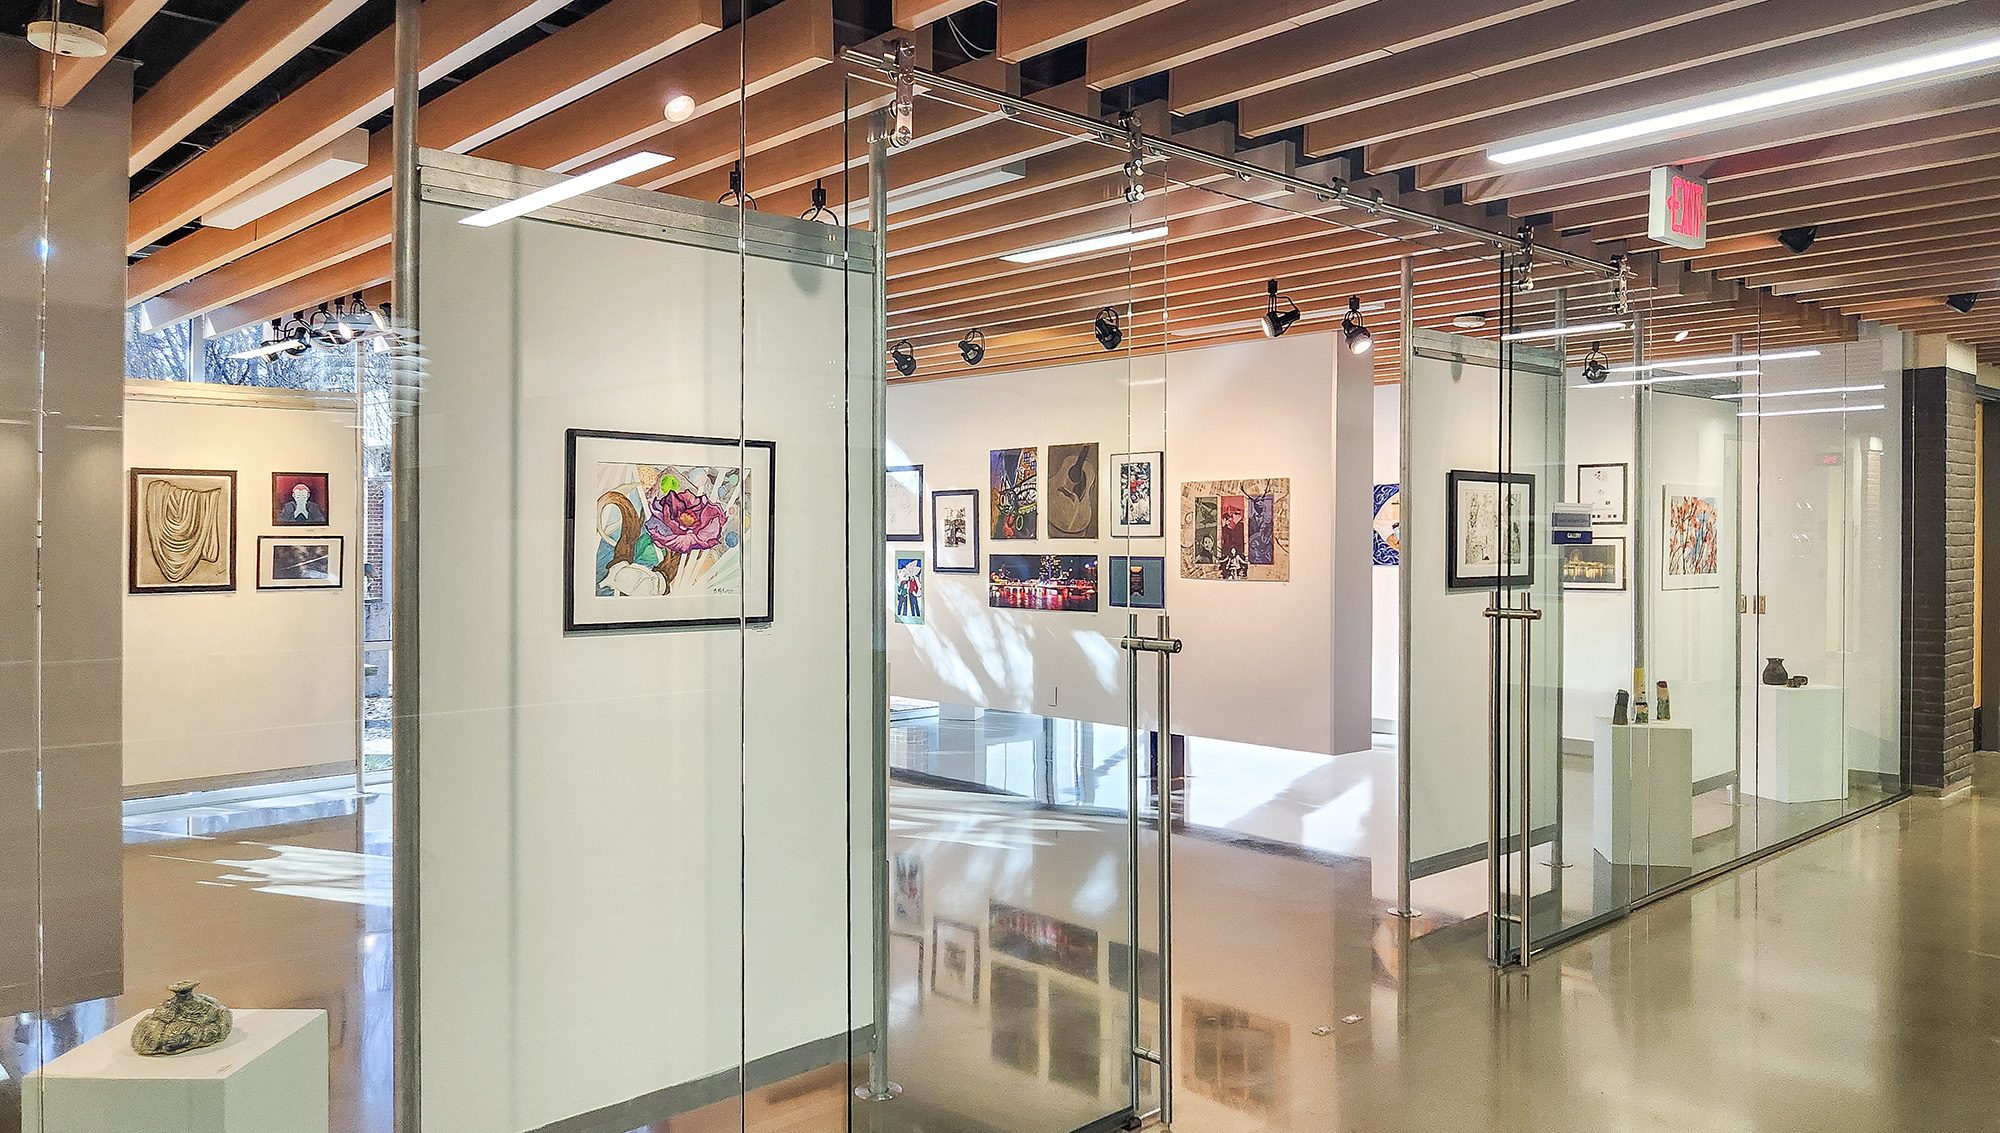 An art exhibit hangs in the campus gallery.